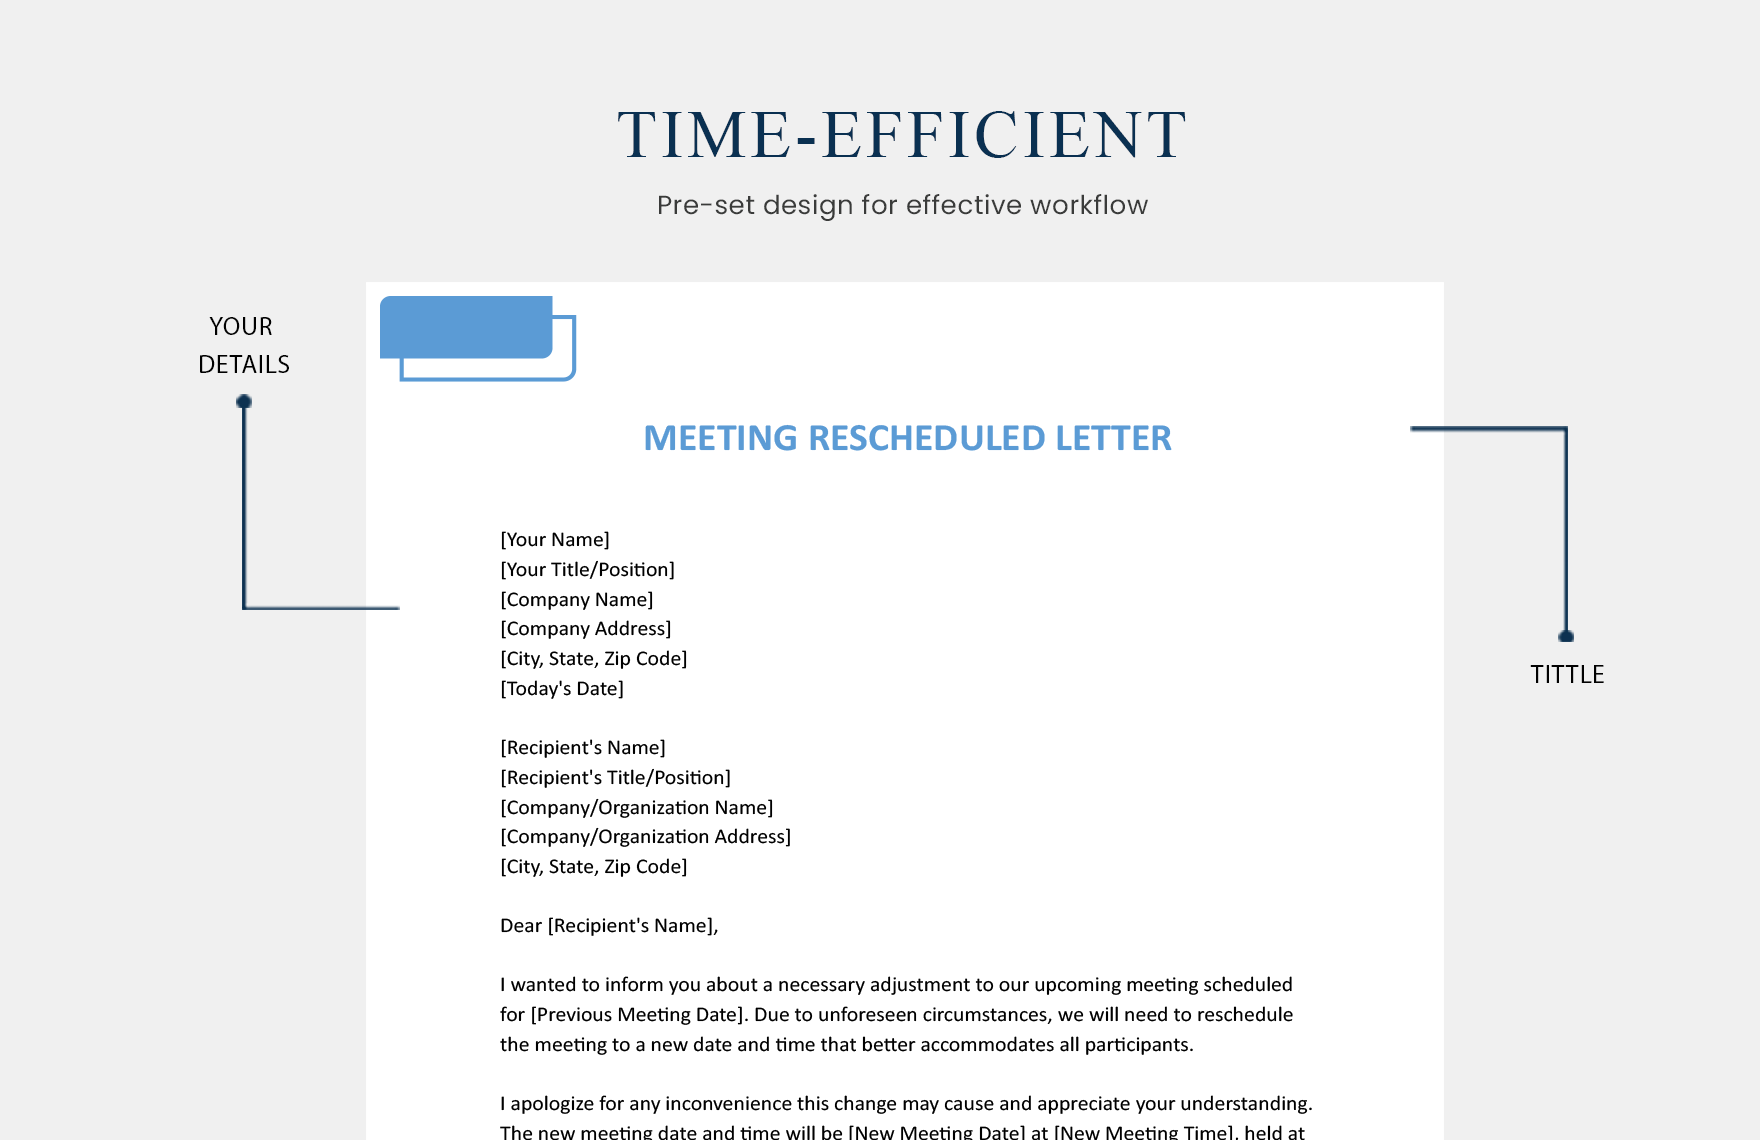 Meeting Rescheduled Letter